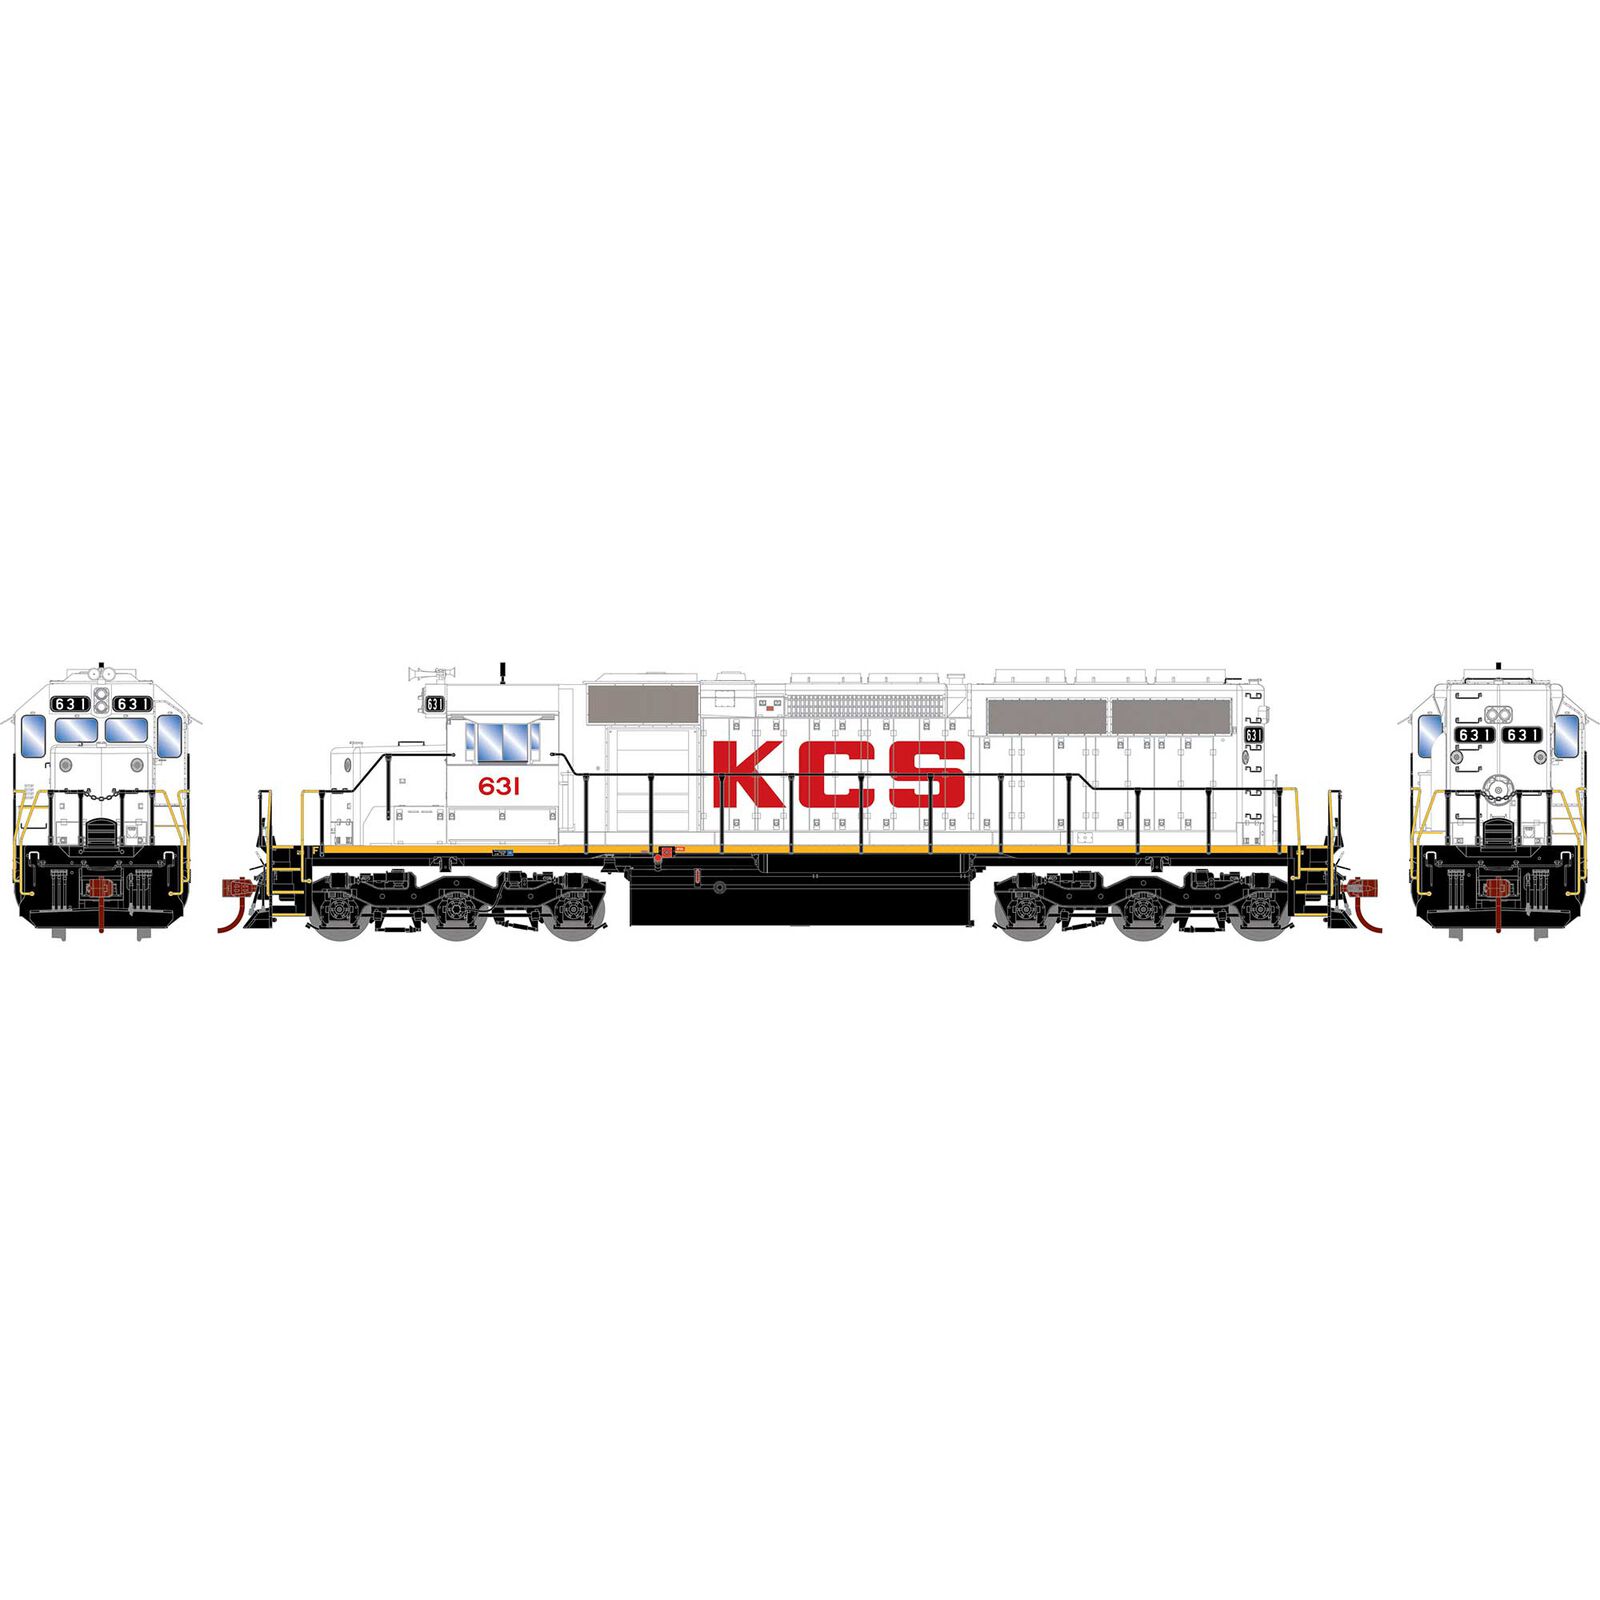 HO SD40 Locomotive, Kansas City Southern #631